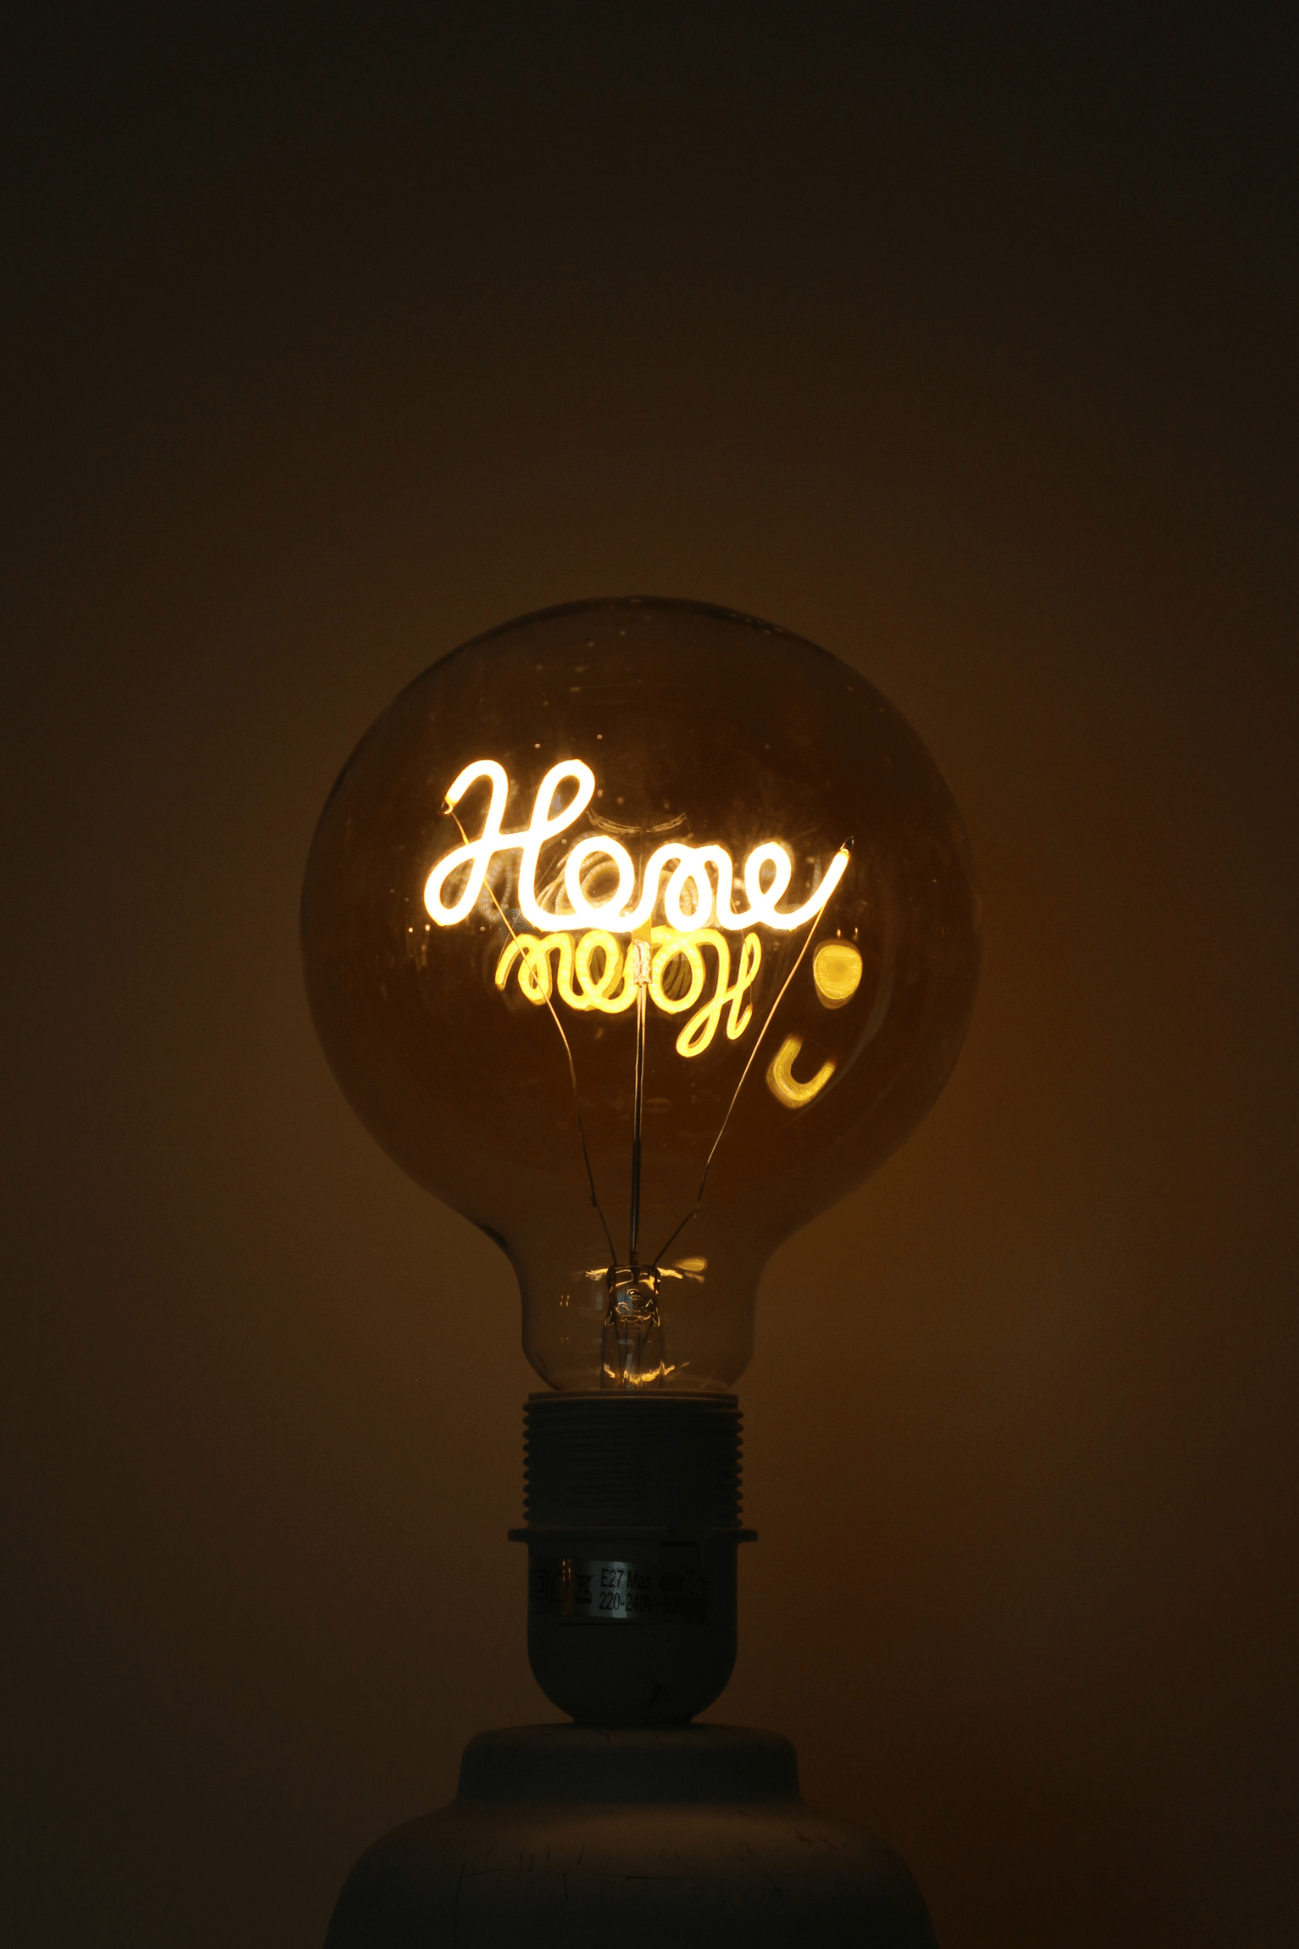 Item International Lamp Lamp - Home - Lampadina E27 con scritta | Item International